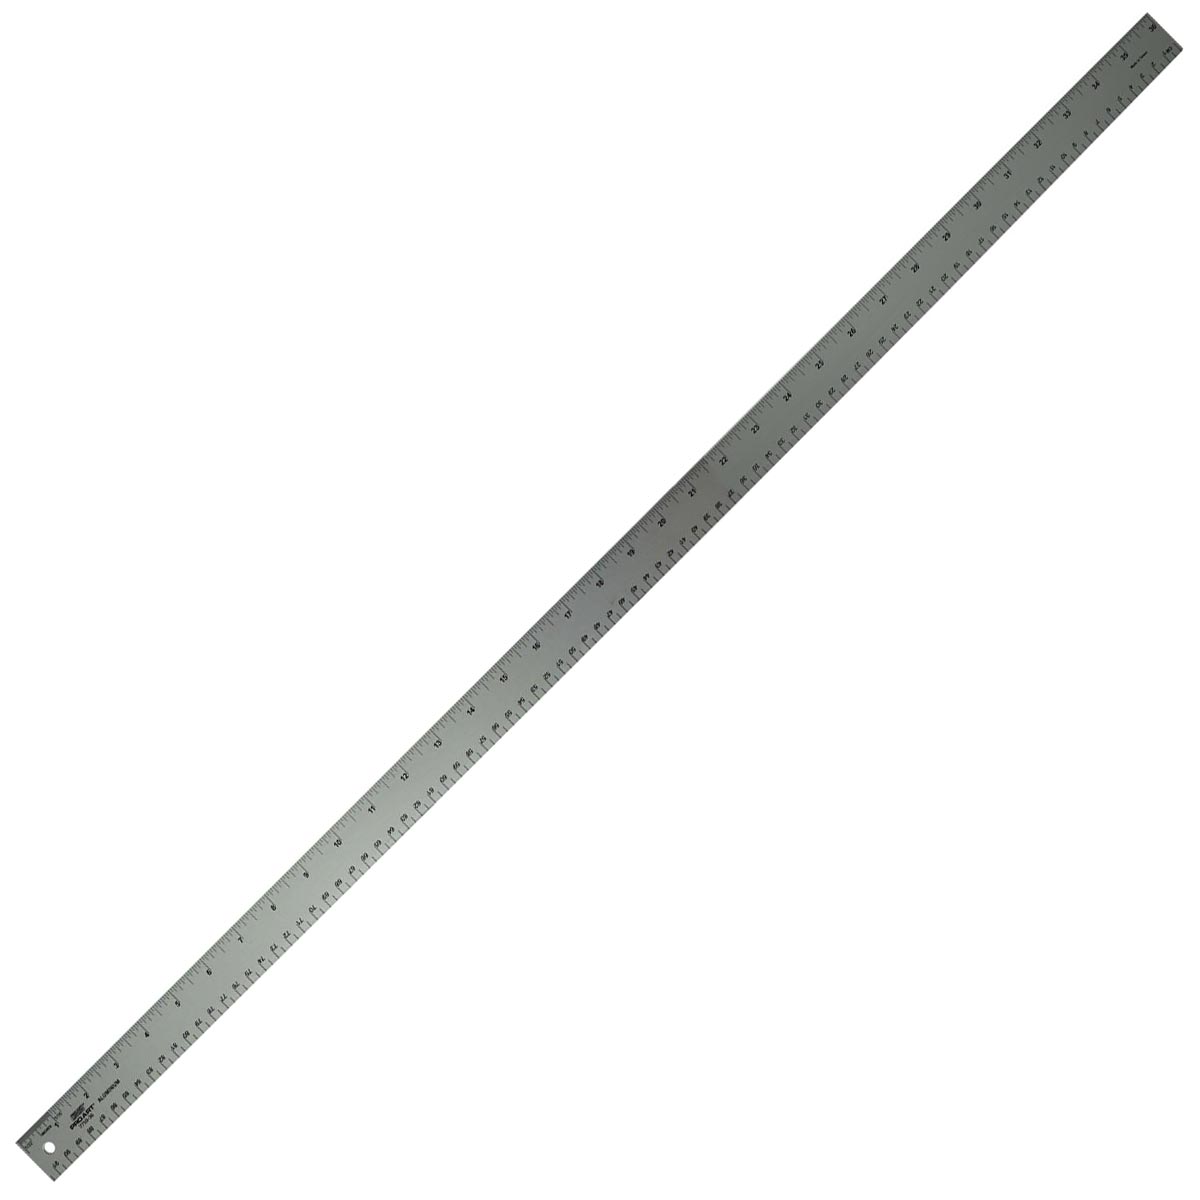 Aluminum Straight Edge 36 inch Ruler by Pro Art